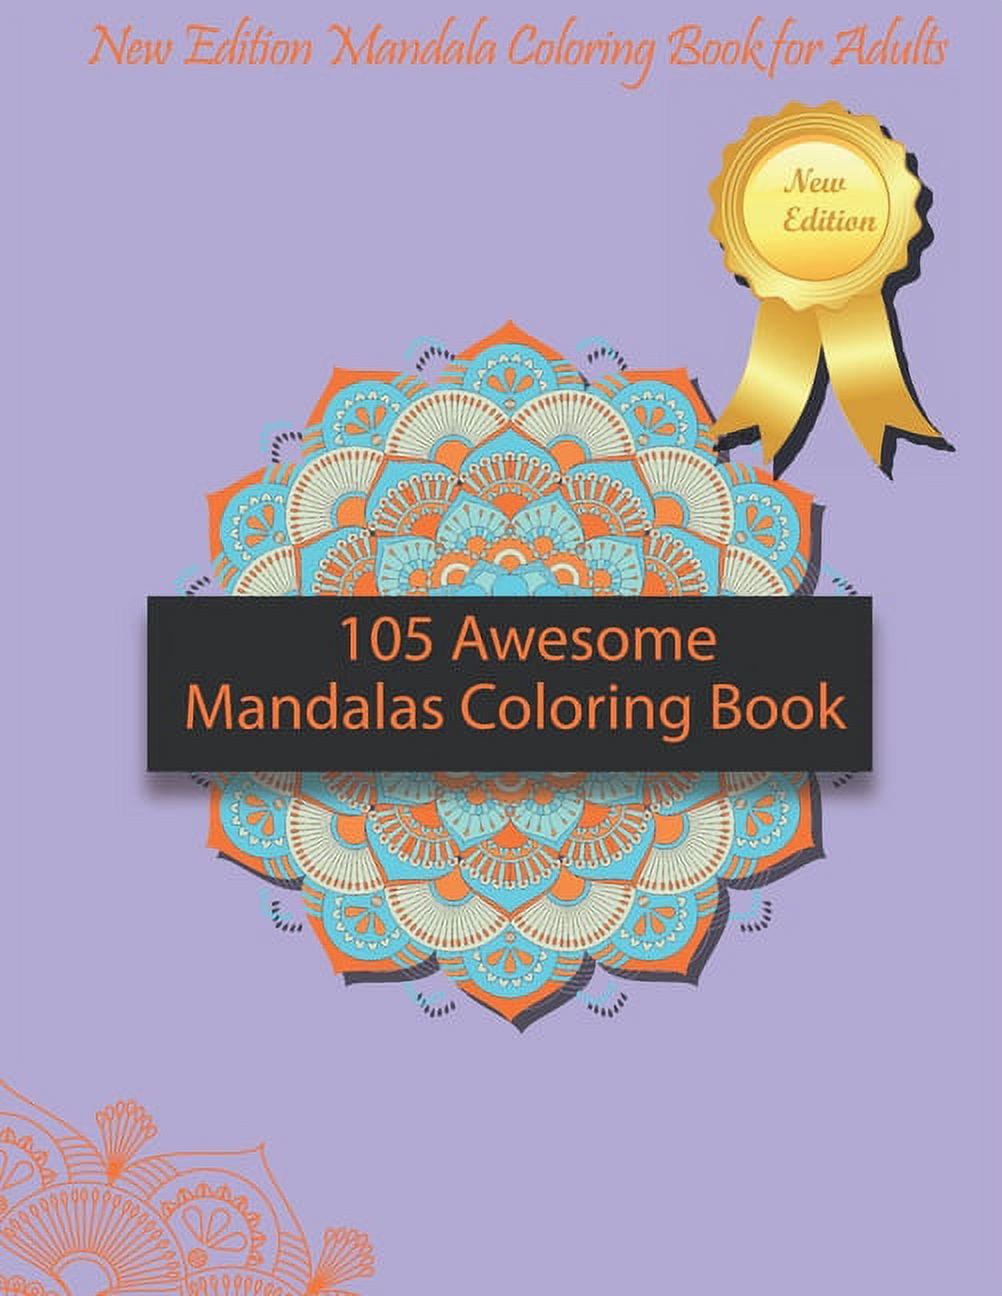 Mandalas Art Coloring Books